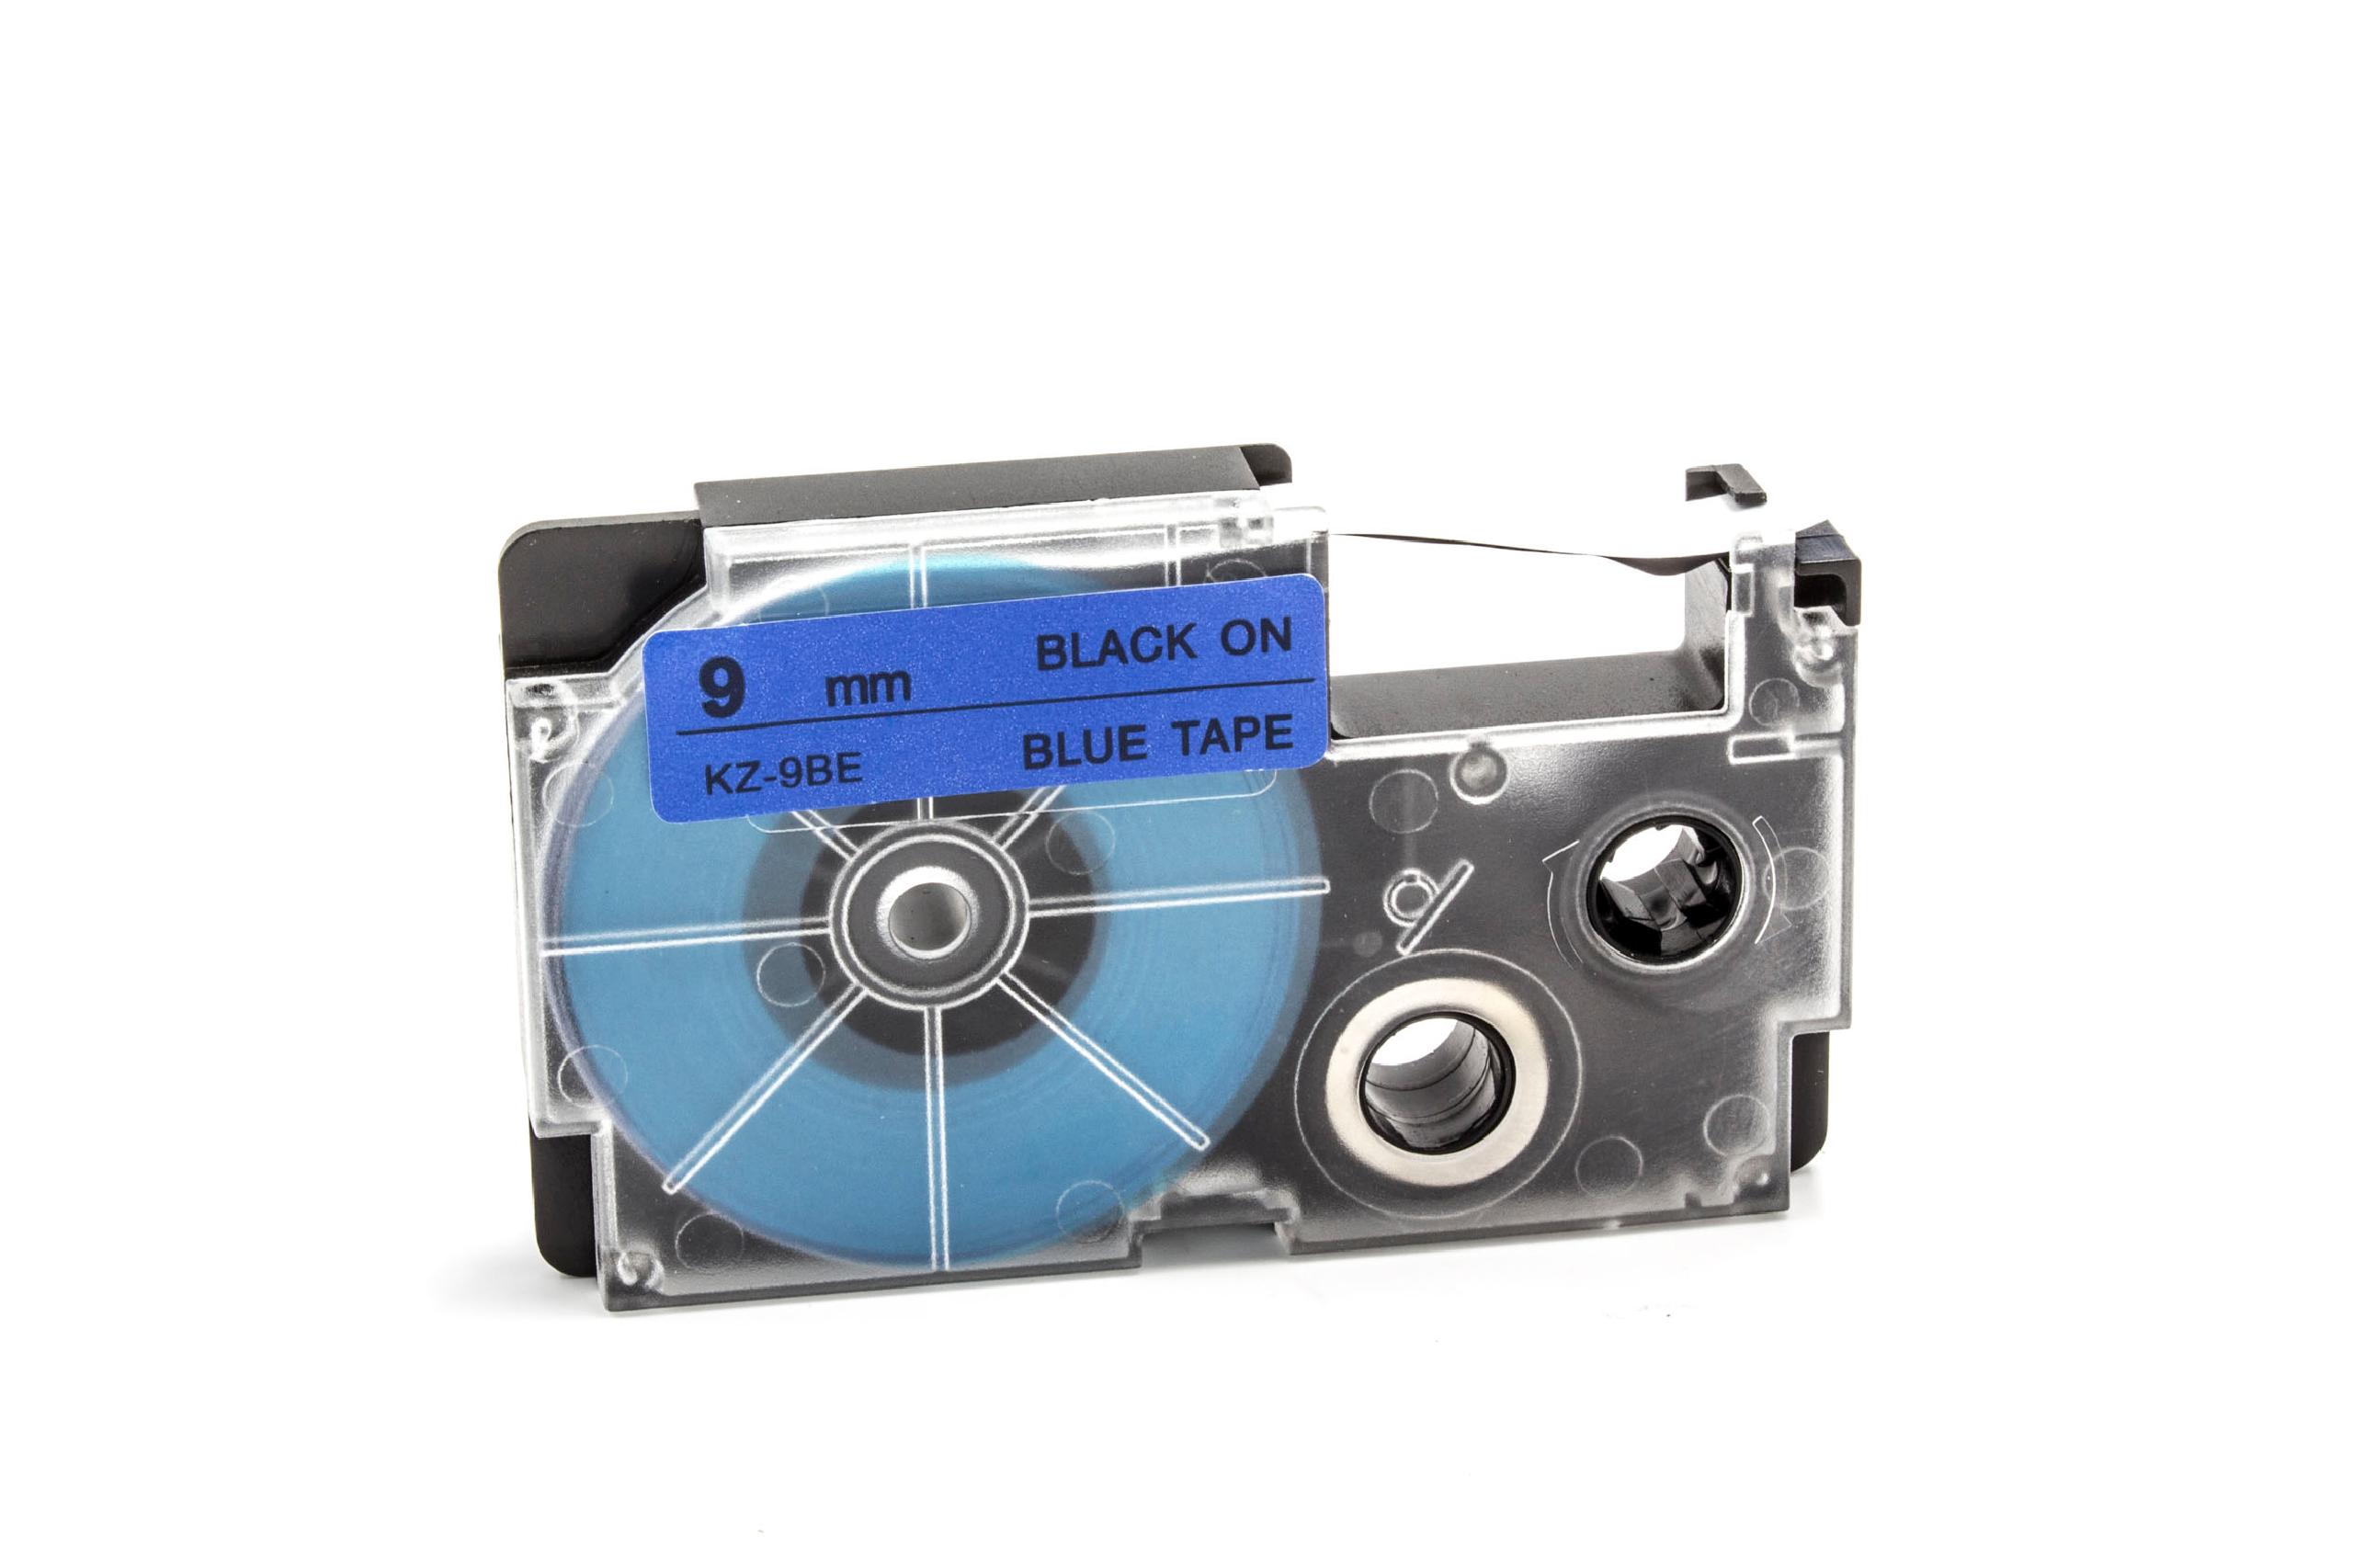 Casete cinta escritura reemplaza Casio XR-9BU1 Negro su Azul